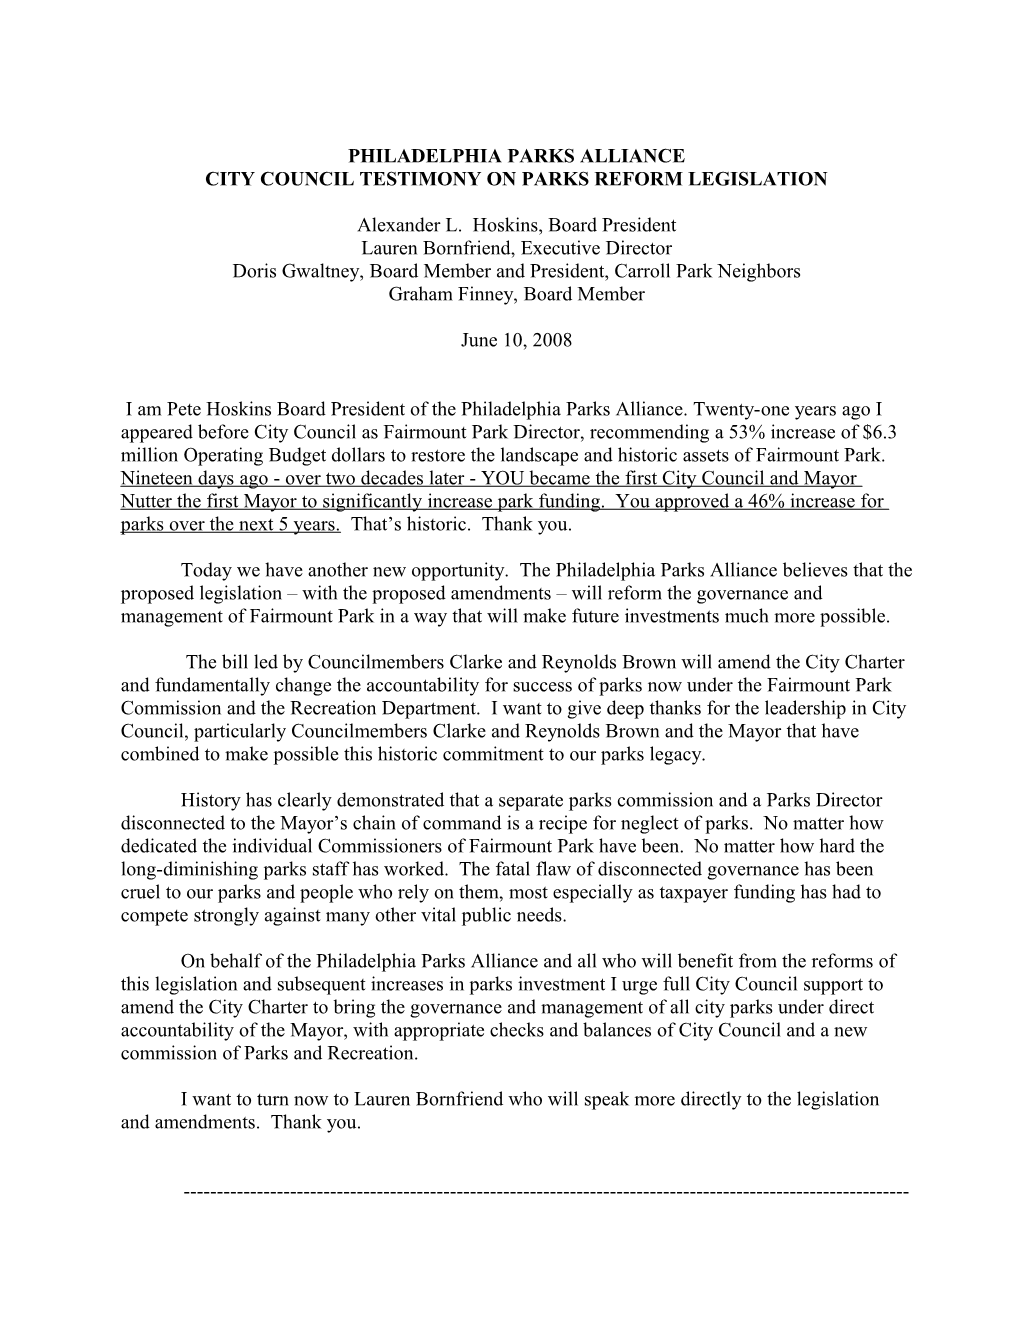 City Council Testimony on Parks Reform Legislation